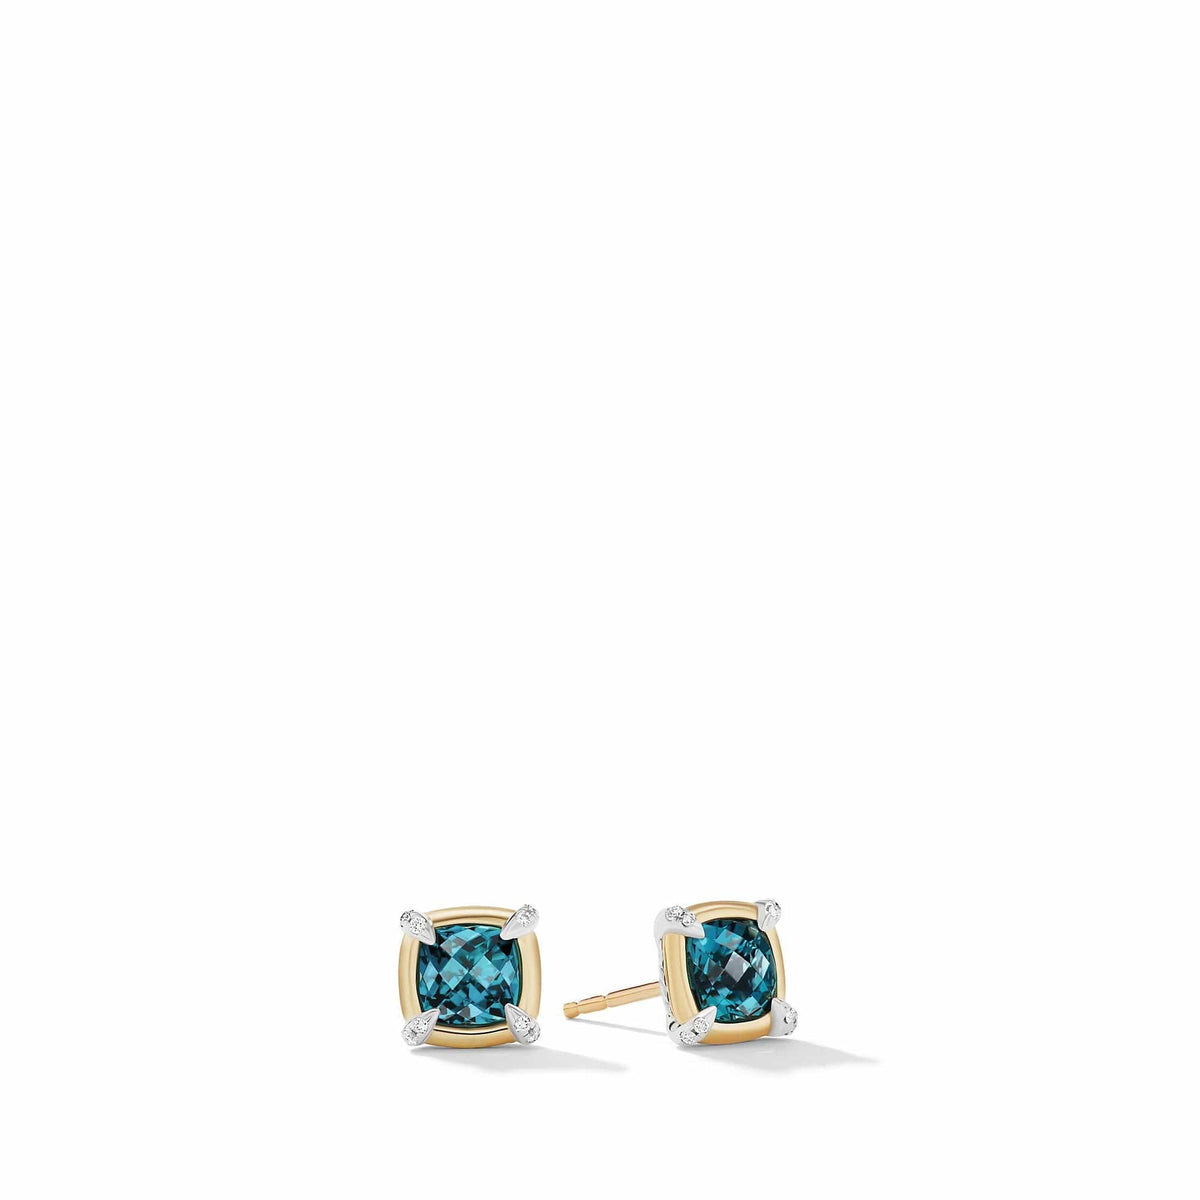 Petite Chatelaine® Stud Earrings with Hampton Blue Topaz, 18K Yellow Gold Bezel and Pavé Diamonds